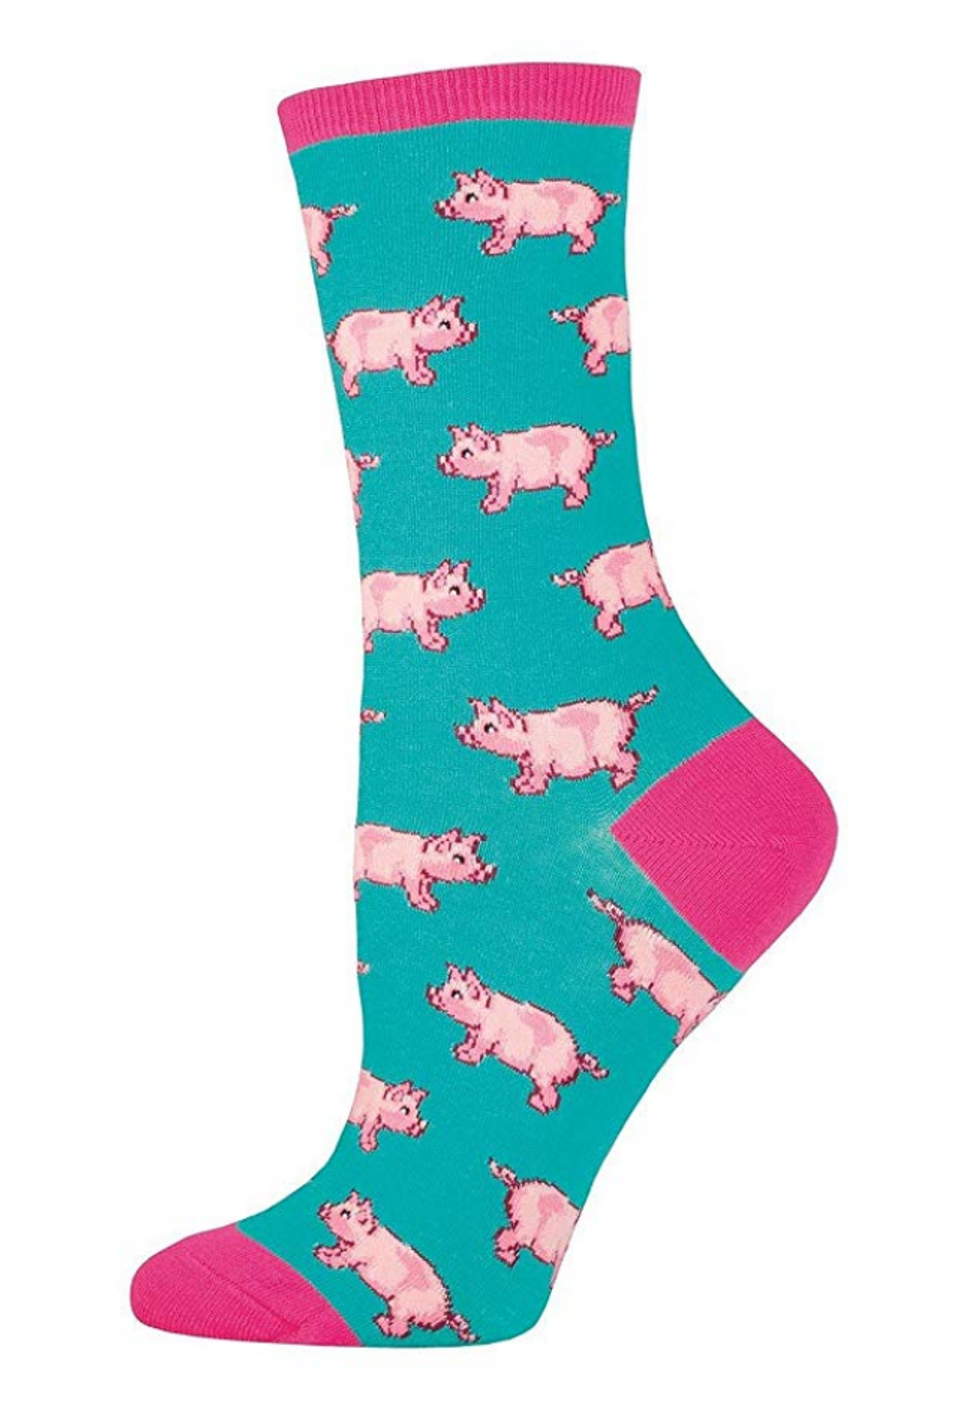 Buy the Socksmith This Little Piggy Women's Novelty Sock on Amazon